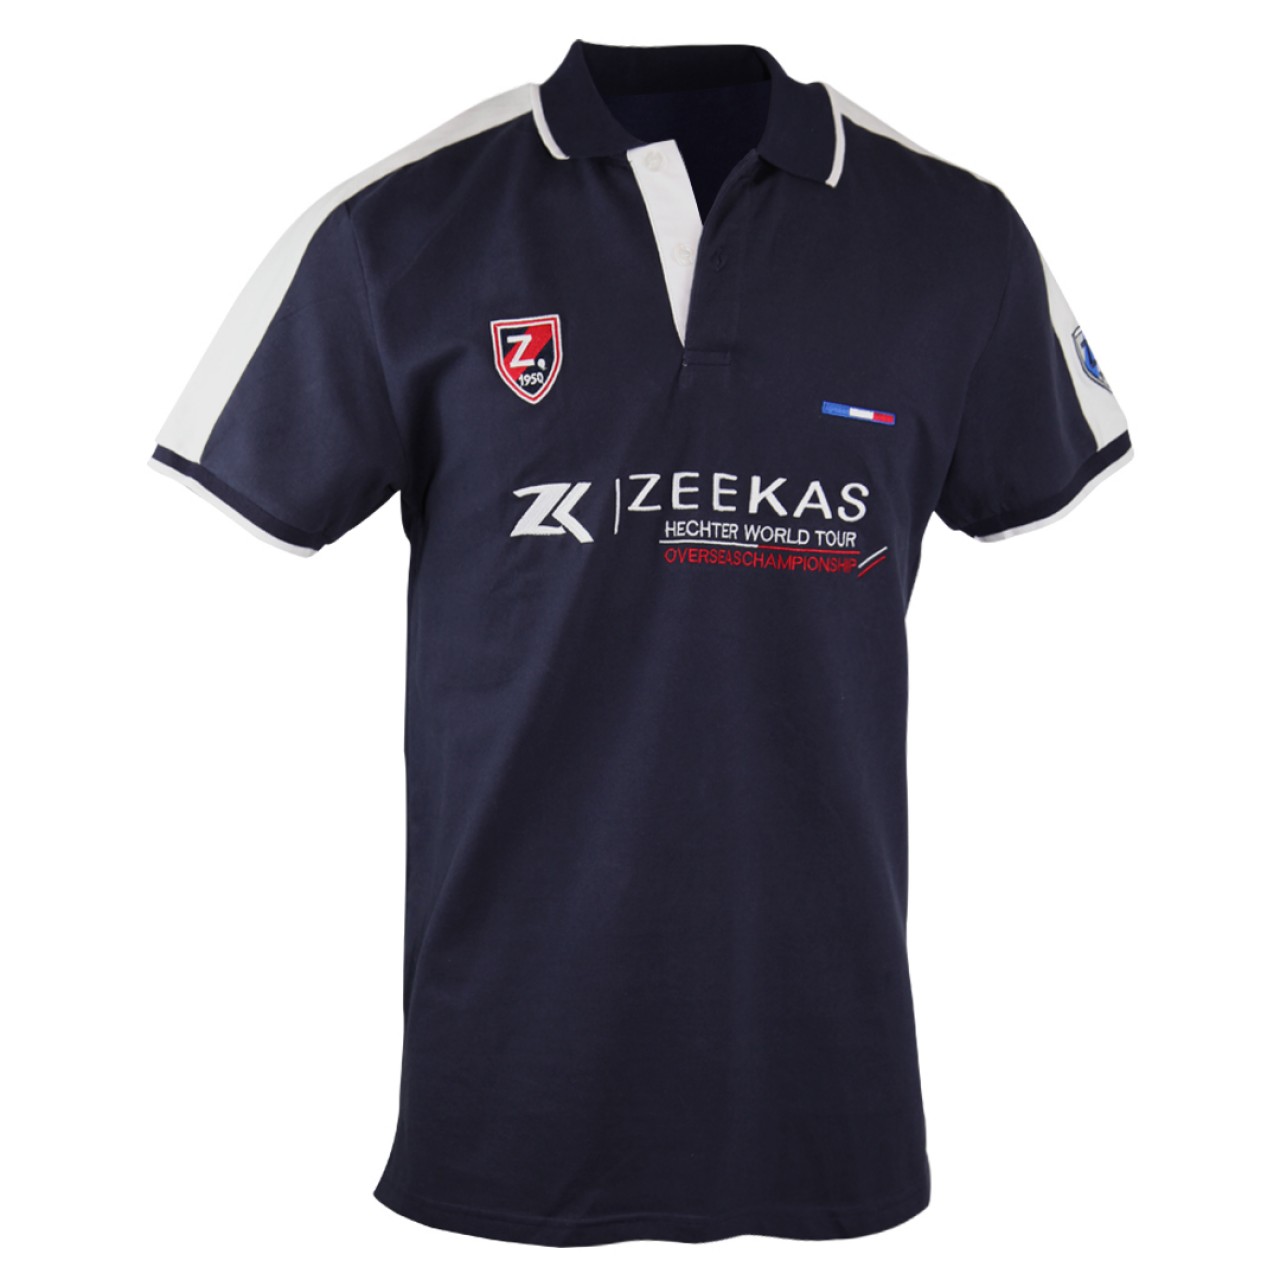 Zeekas White Stripe Pattern Mens Dark Navy Blue Polo T Shirt With Hechter World Tour Overseas Championship Print Design